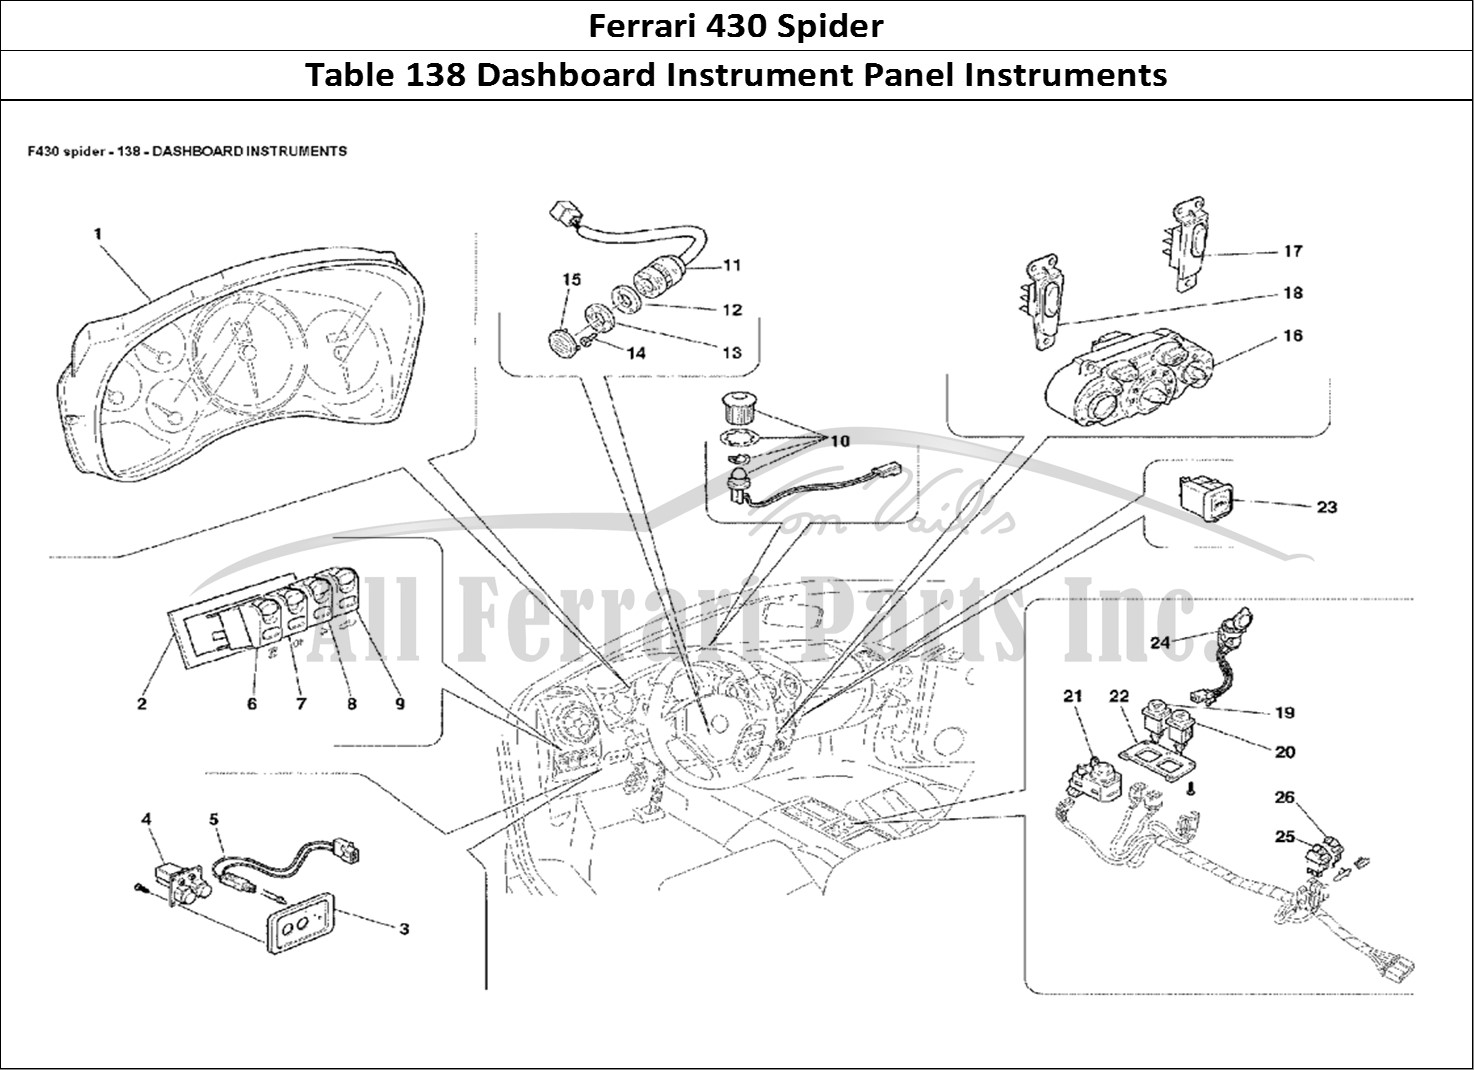 Ferrari Parts Ferrari 430 Spider Page 138 Dashboard Instruments